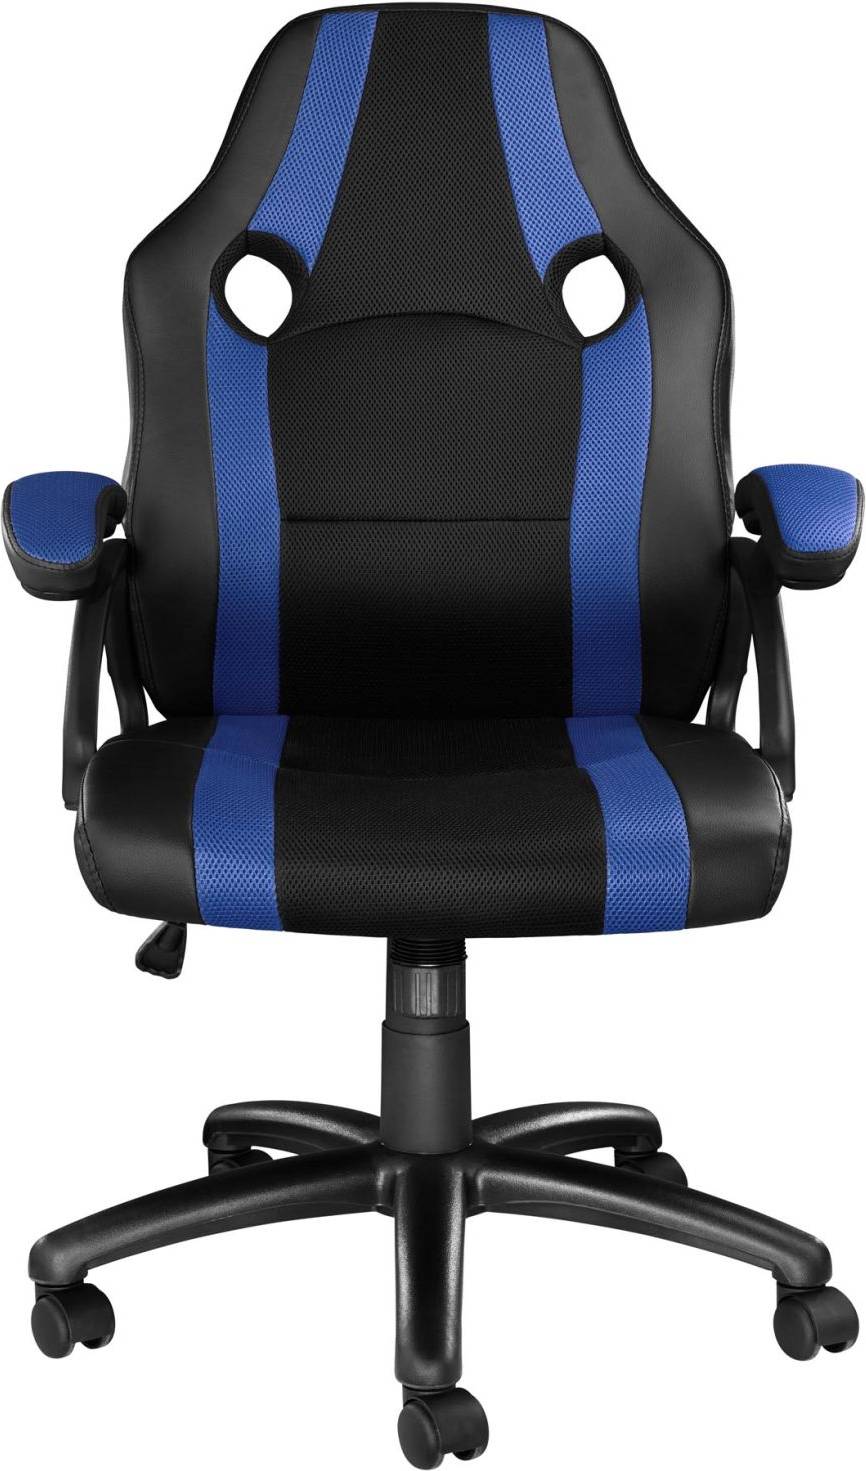  Bild på tectake Benny Gaming Chair - Black/Blue gamingstol